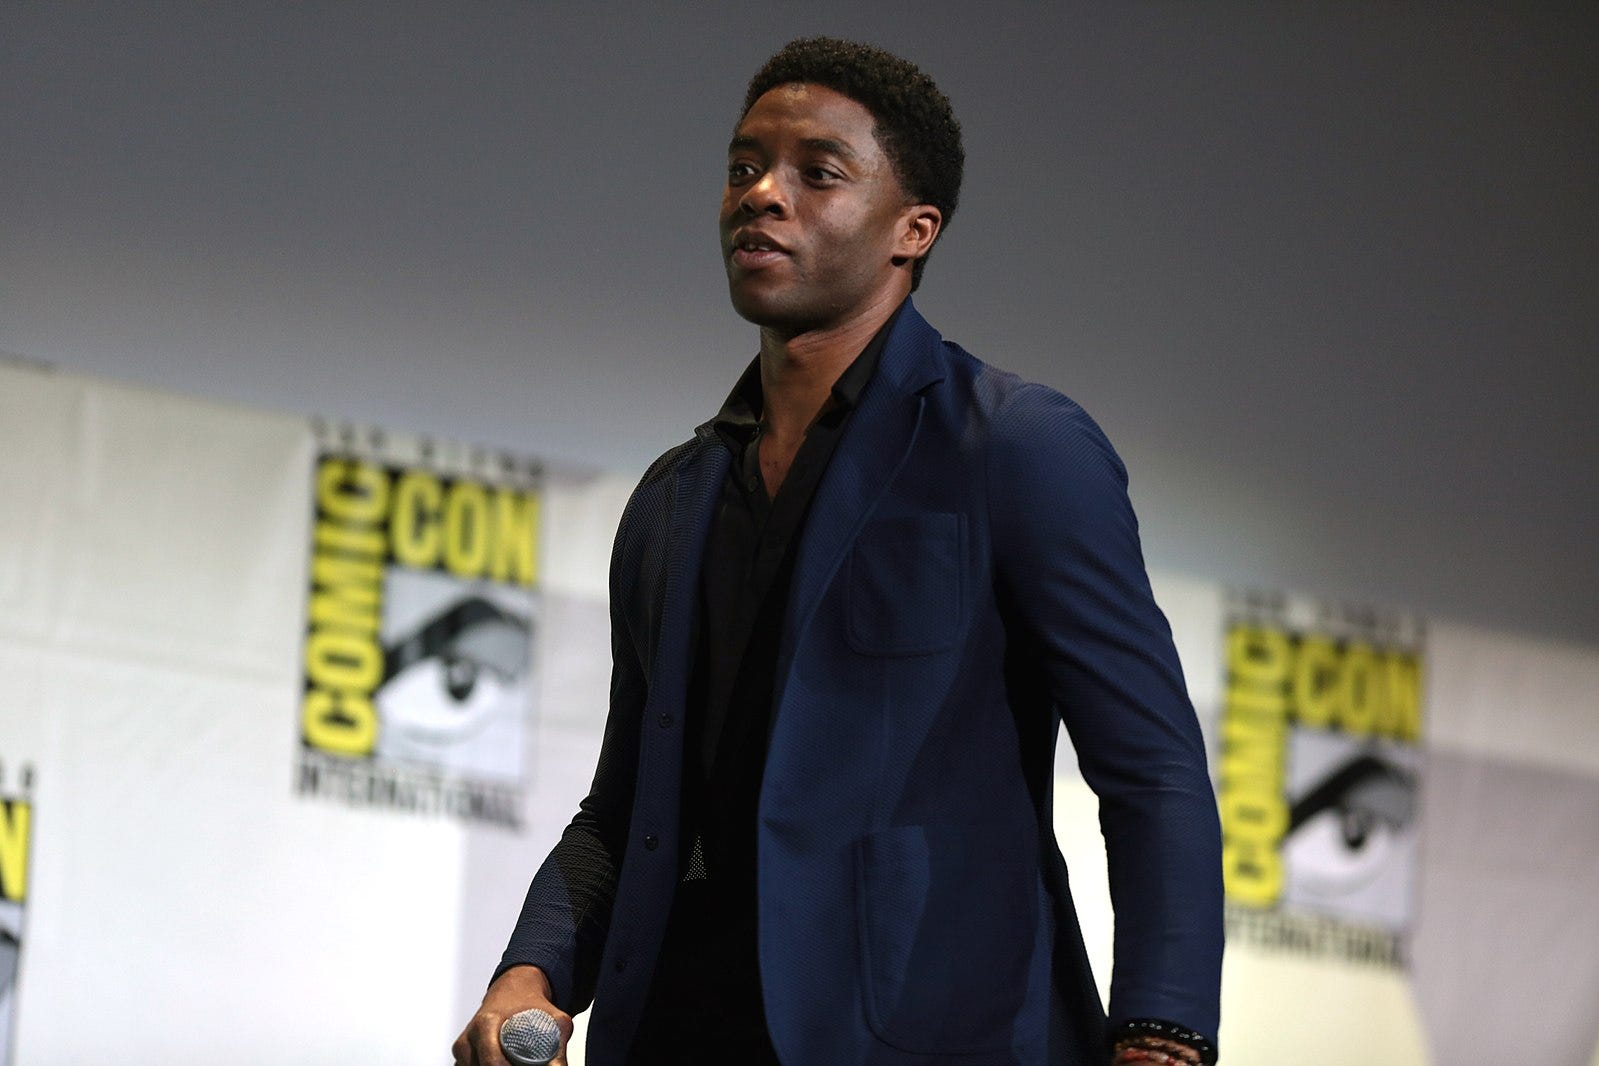 Netflix, Howard Set Up $5.4M Scholarship To Honor 'Black Panther' Star Chadwick Boseman